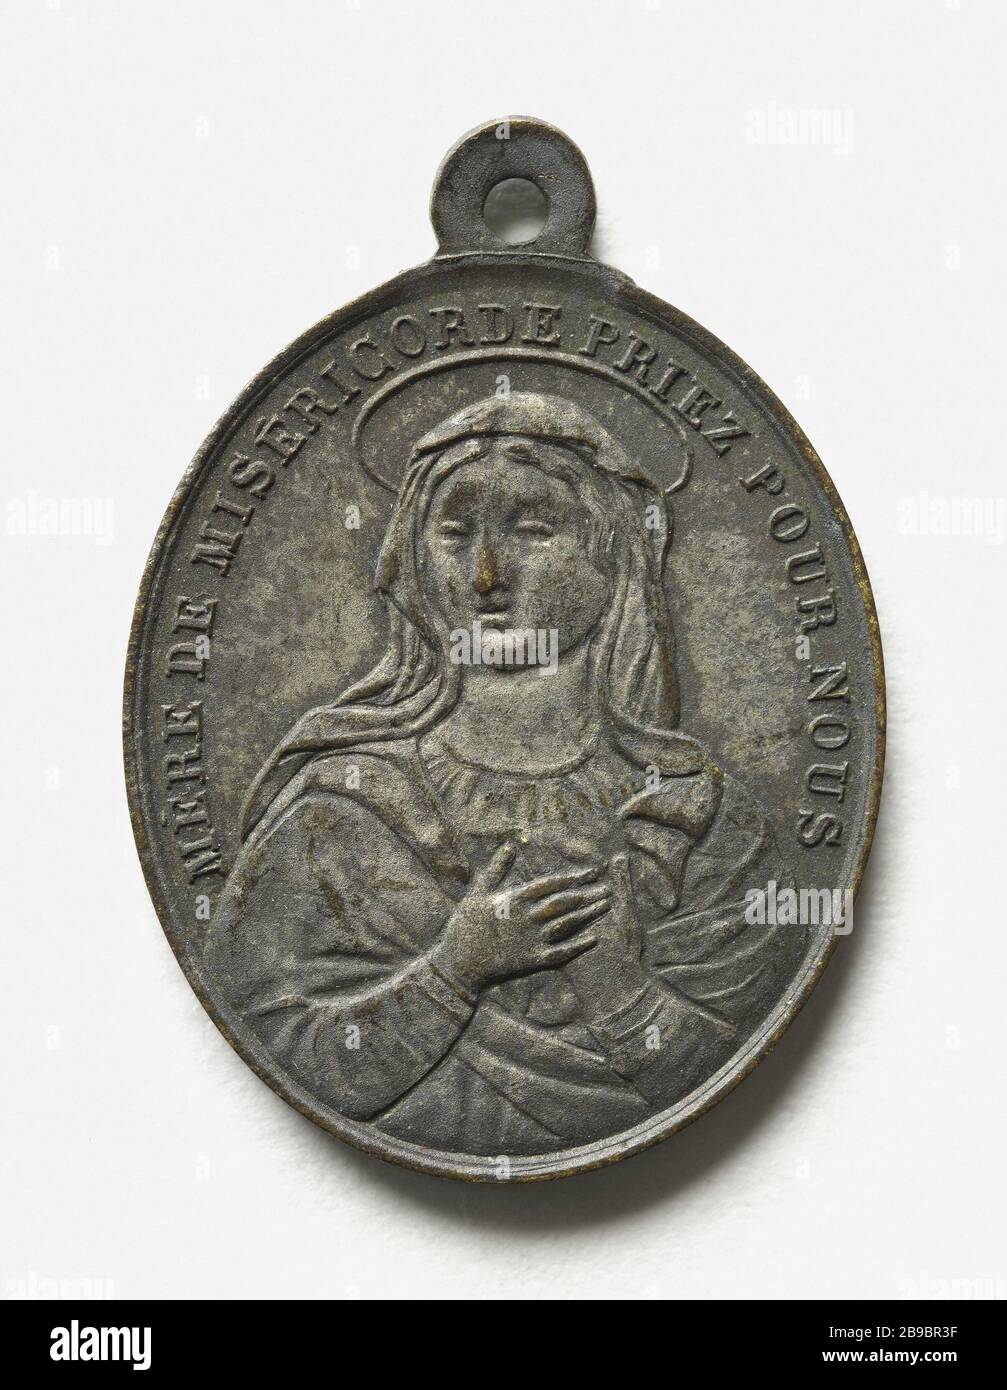 Sainte Vierge de Rimini, 12 May 1850 (Title factice) Anonyme. Sainte Vierge de Rimini, 12 mai 1850 (avers). Paris, musée Carnavalet. Stock Photo